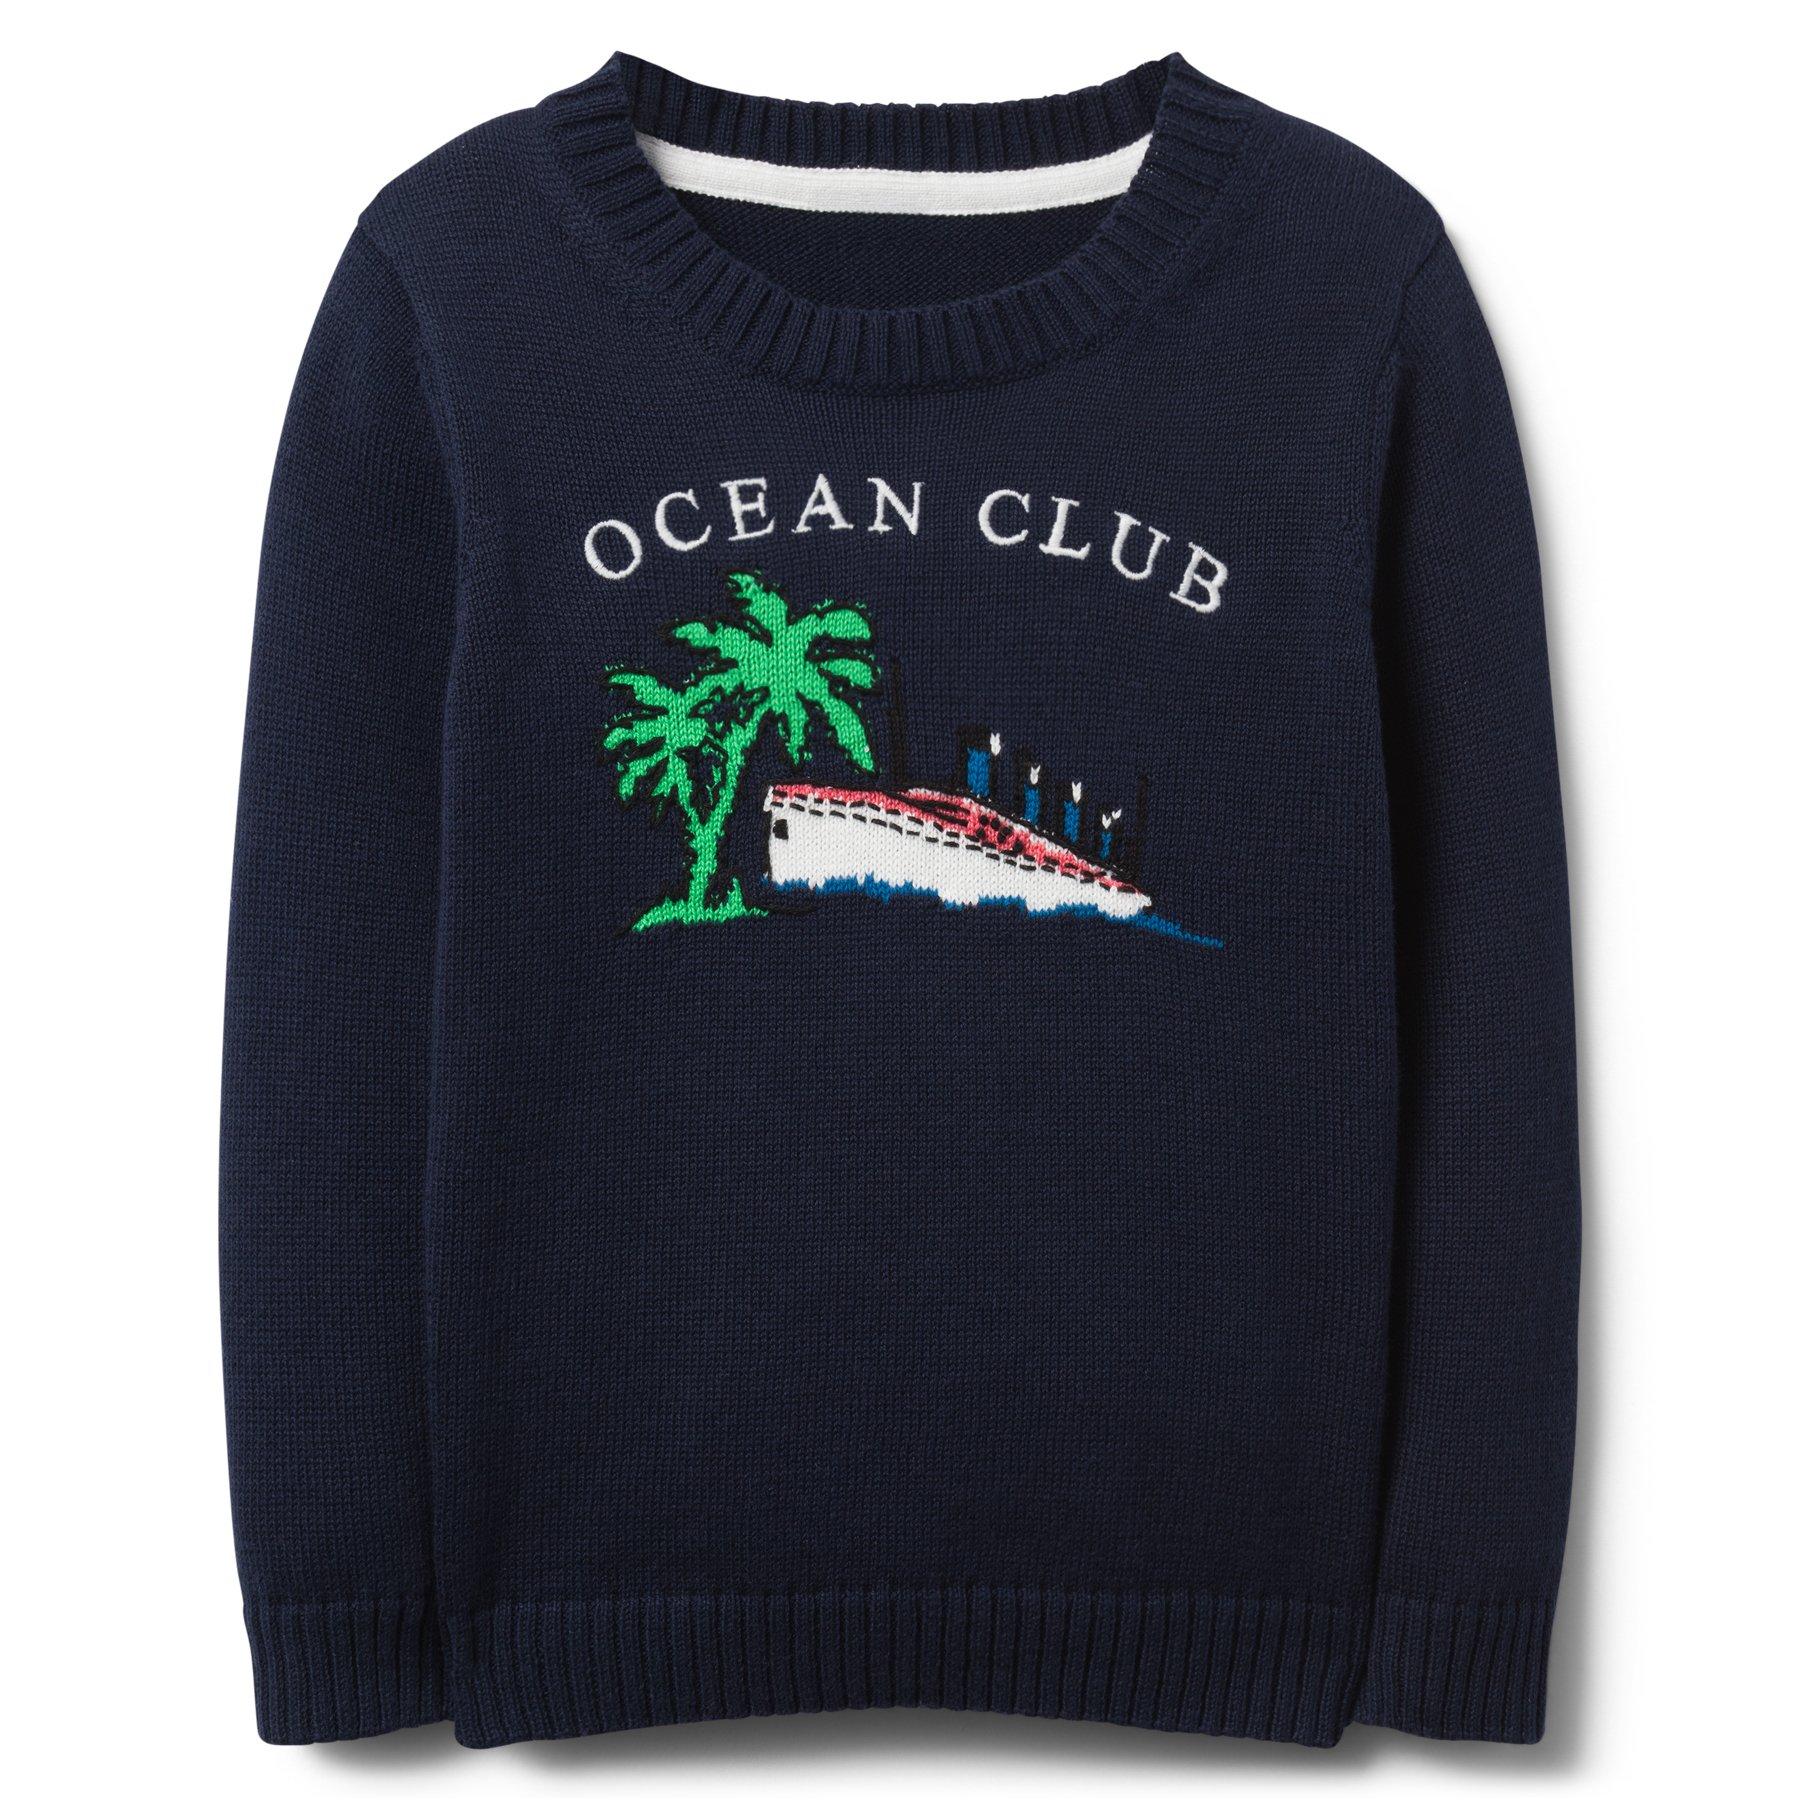 Ocean Club Sweater